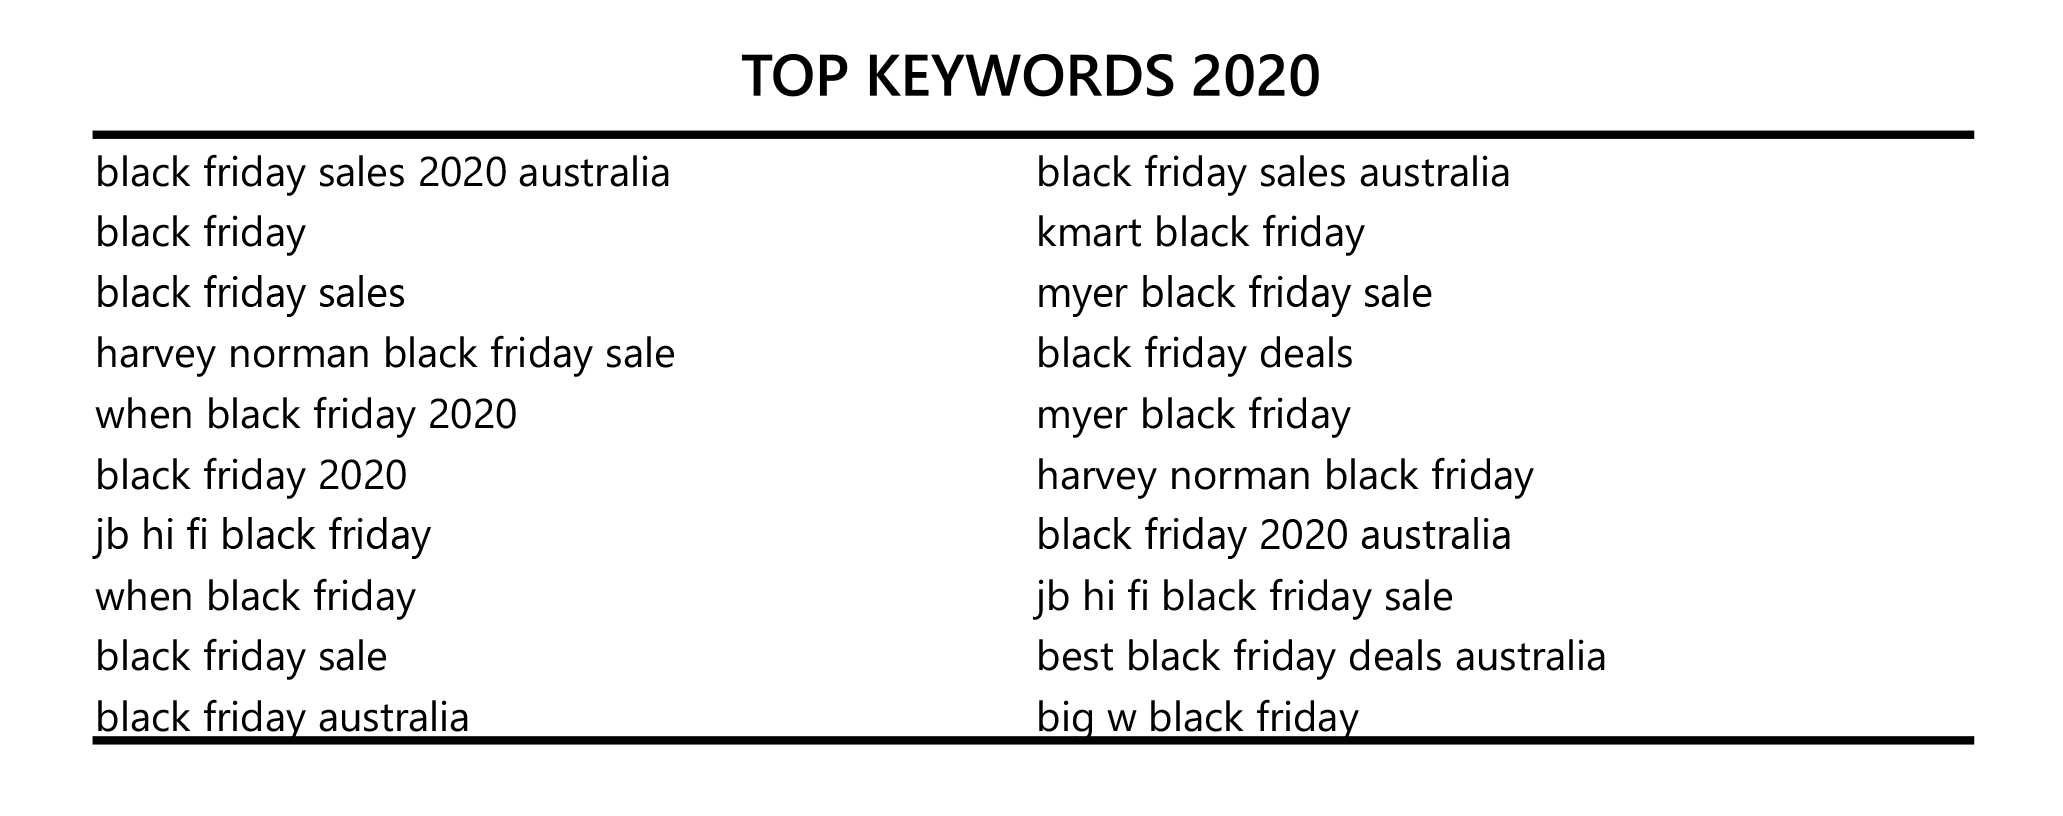 TOP 20 keywords for Black Friday